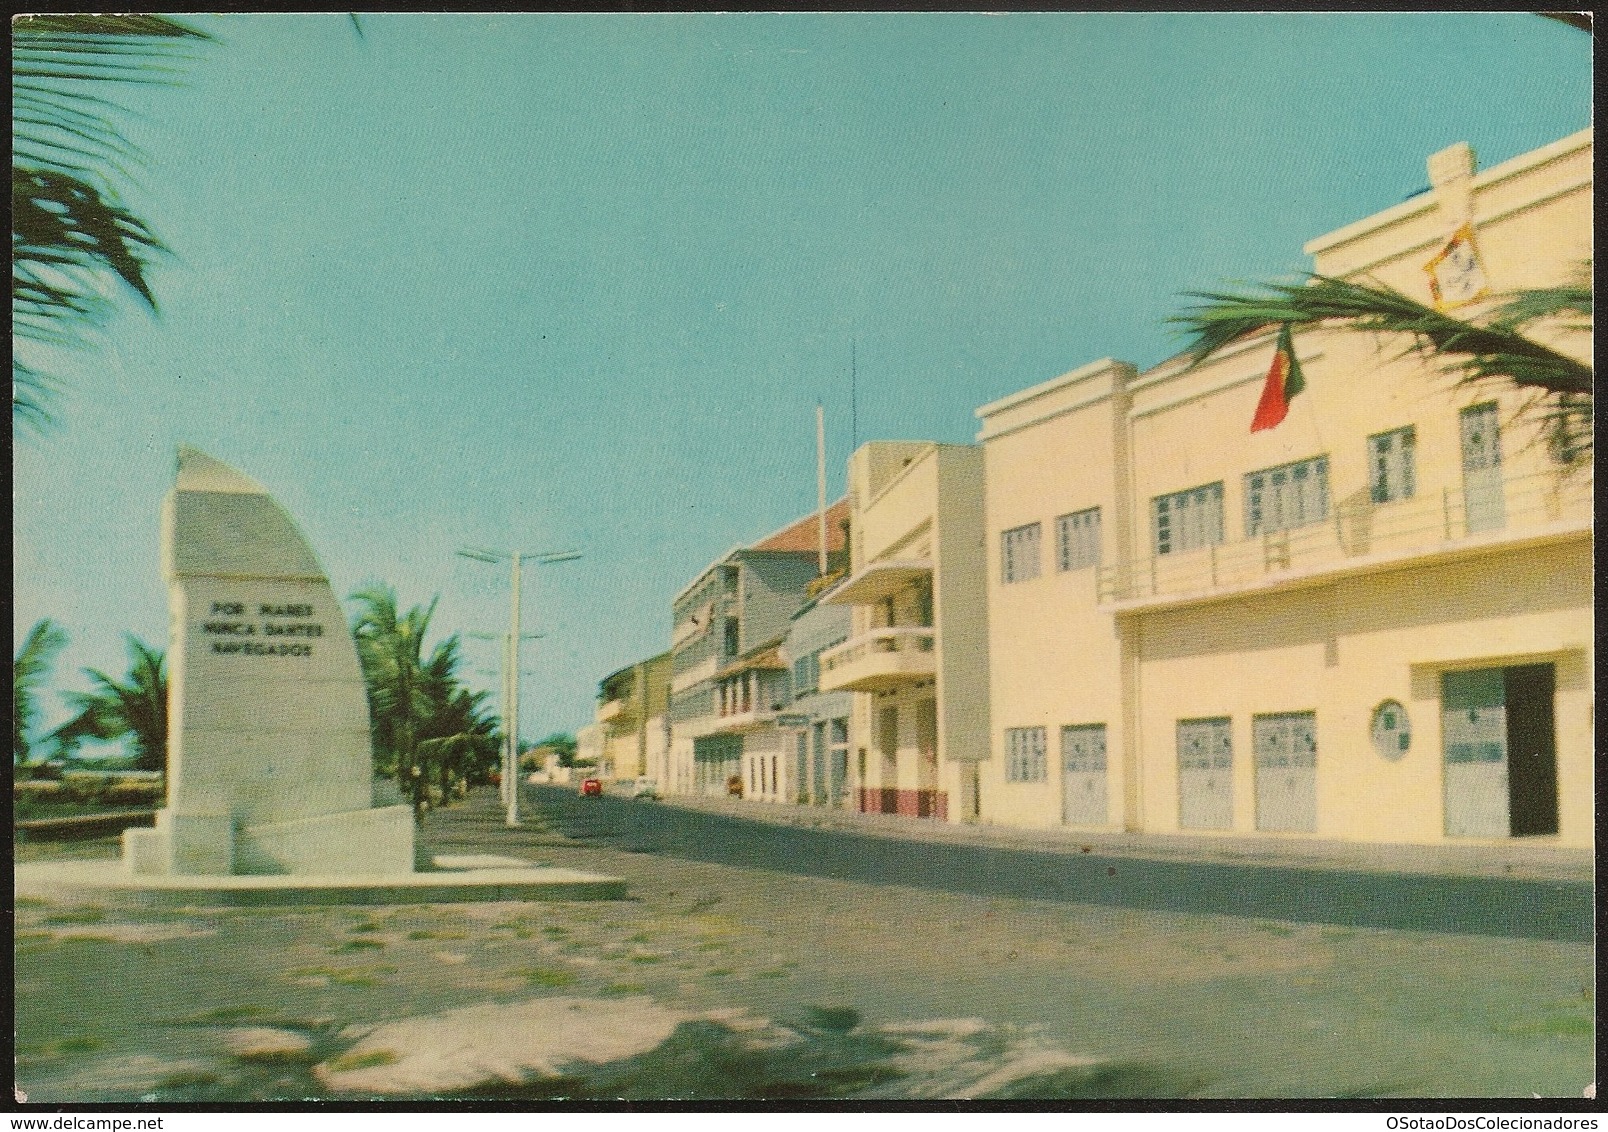 Postal Guiné Portugal - Guiné Portuguesa - Avenida Marginal - CPA - Postcard - Guinea-Bissau